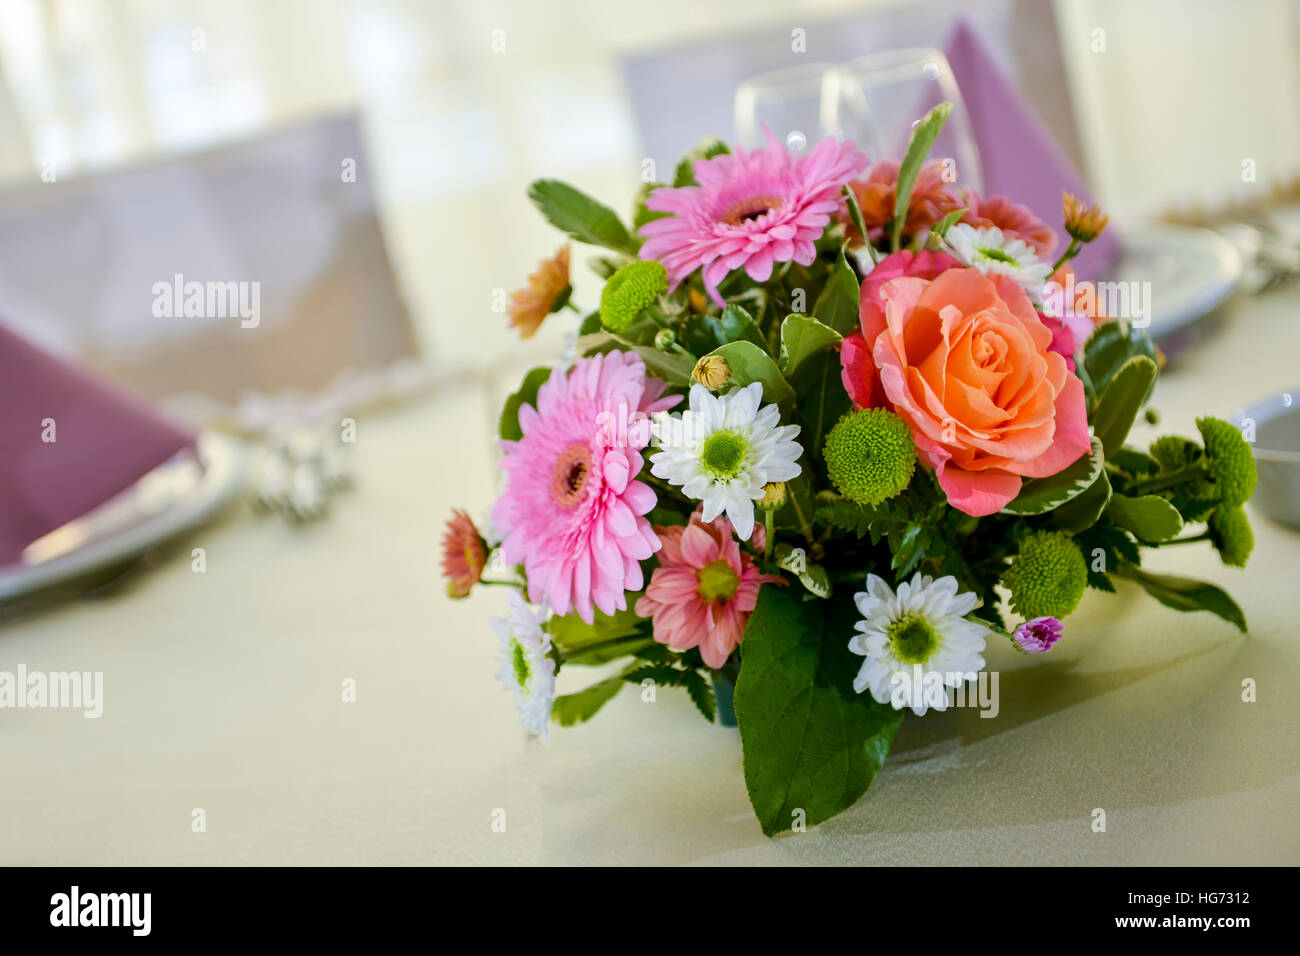 Flower arrangement on the table Stock Photo